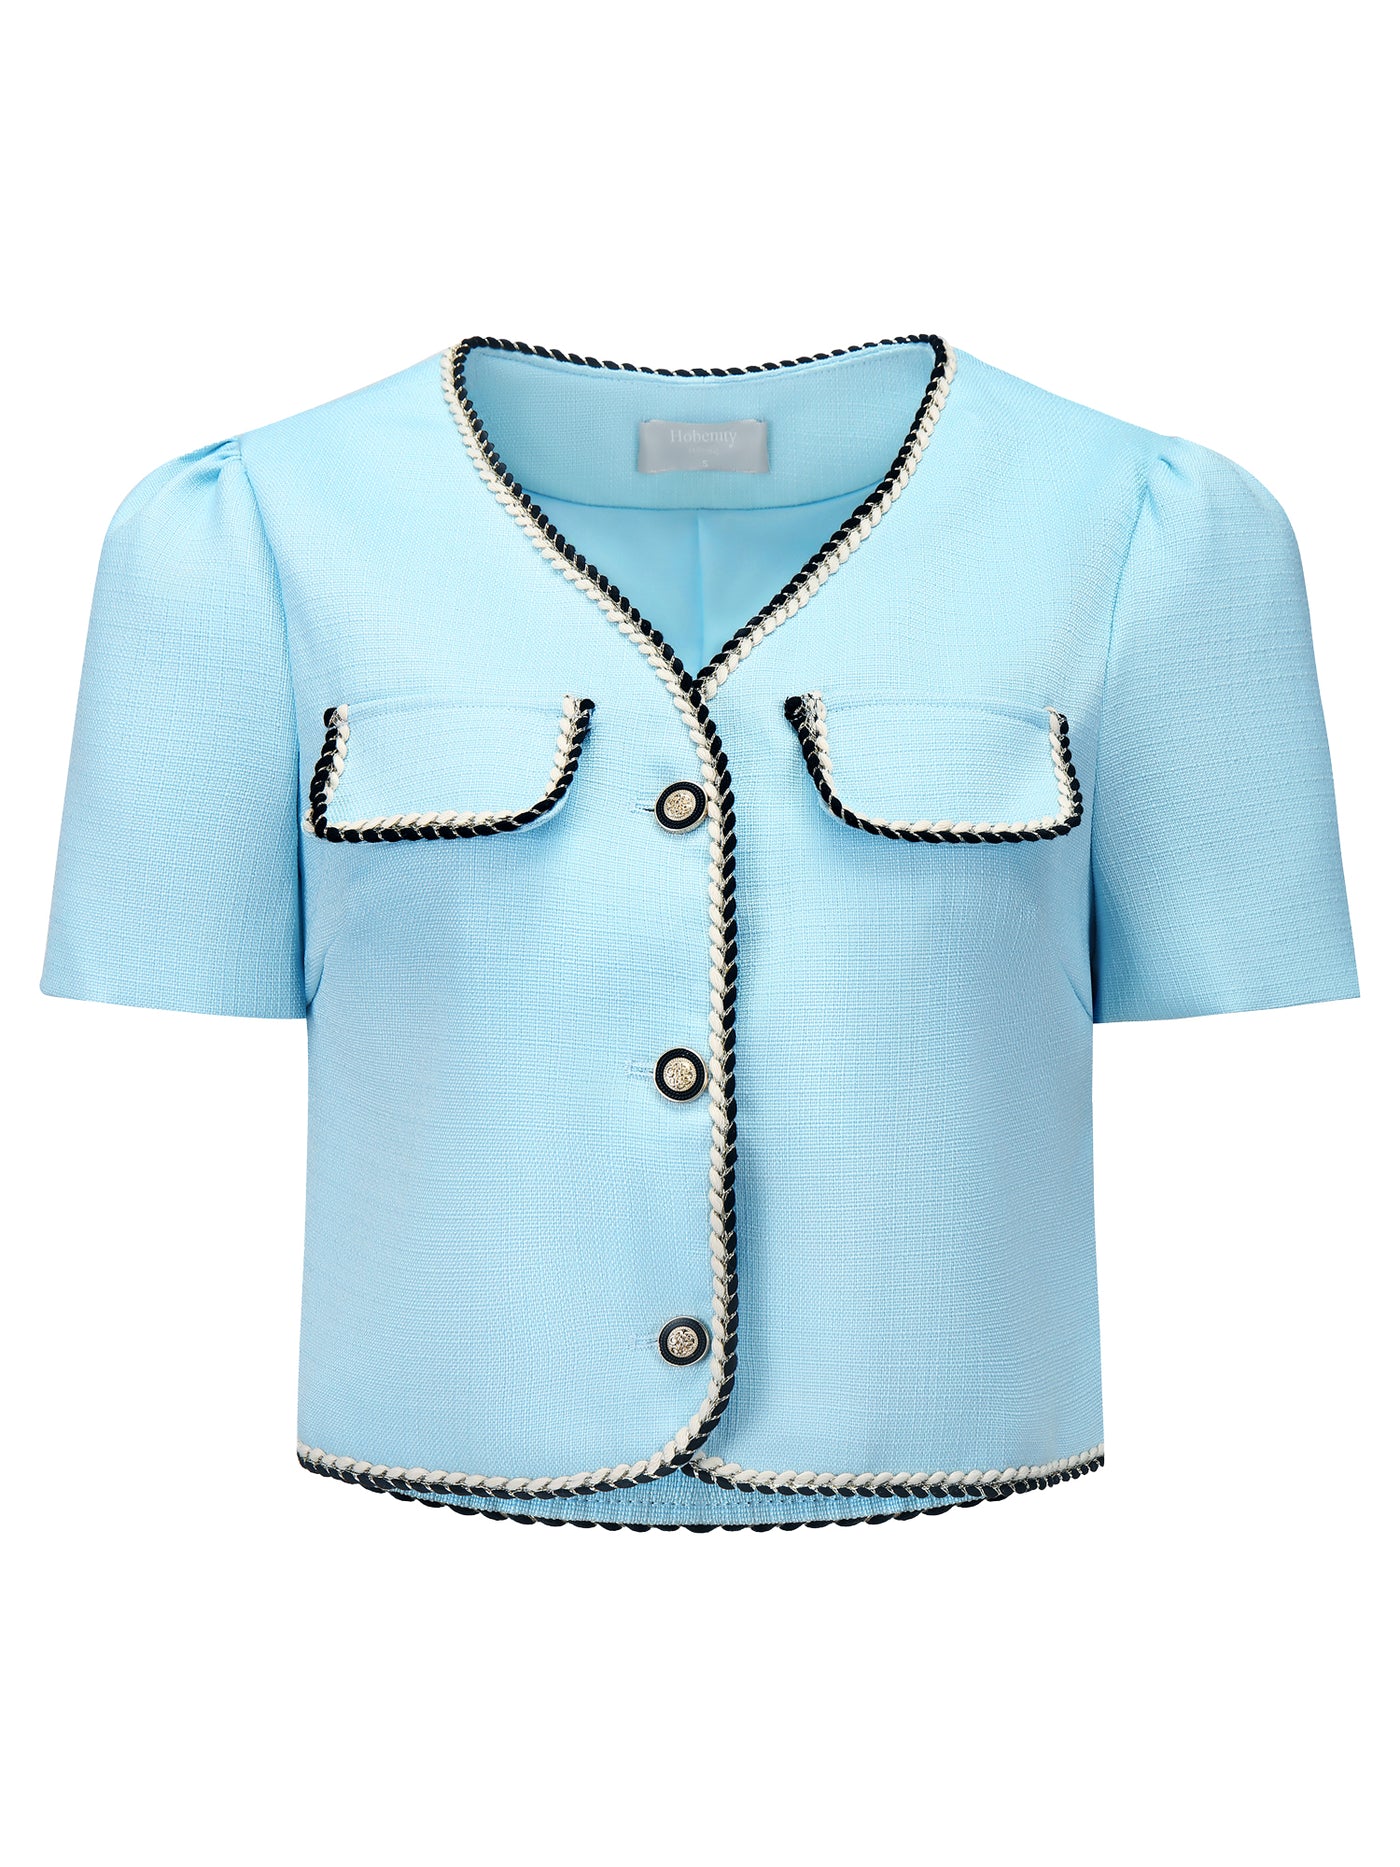 Bublédon Women's Tweed Jacket Contrast Color Button Down Short Sleeve Work Office Blazer